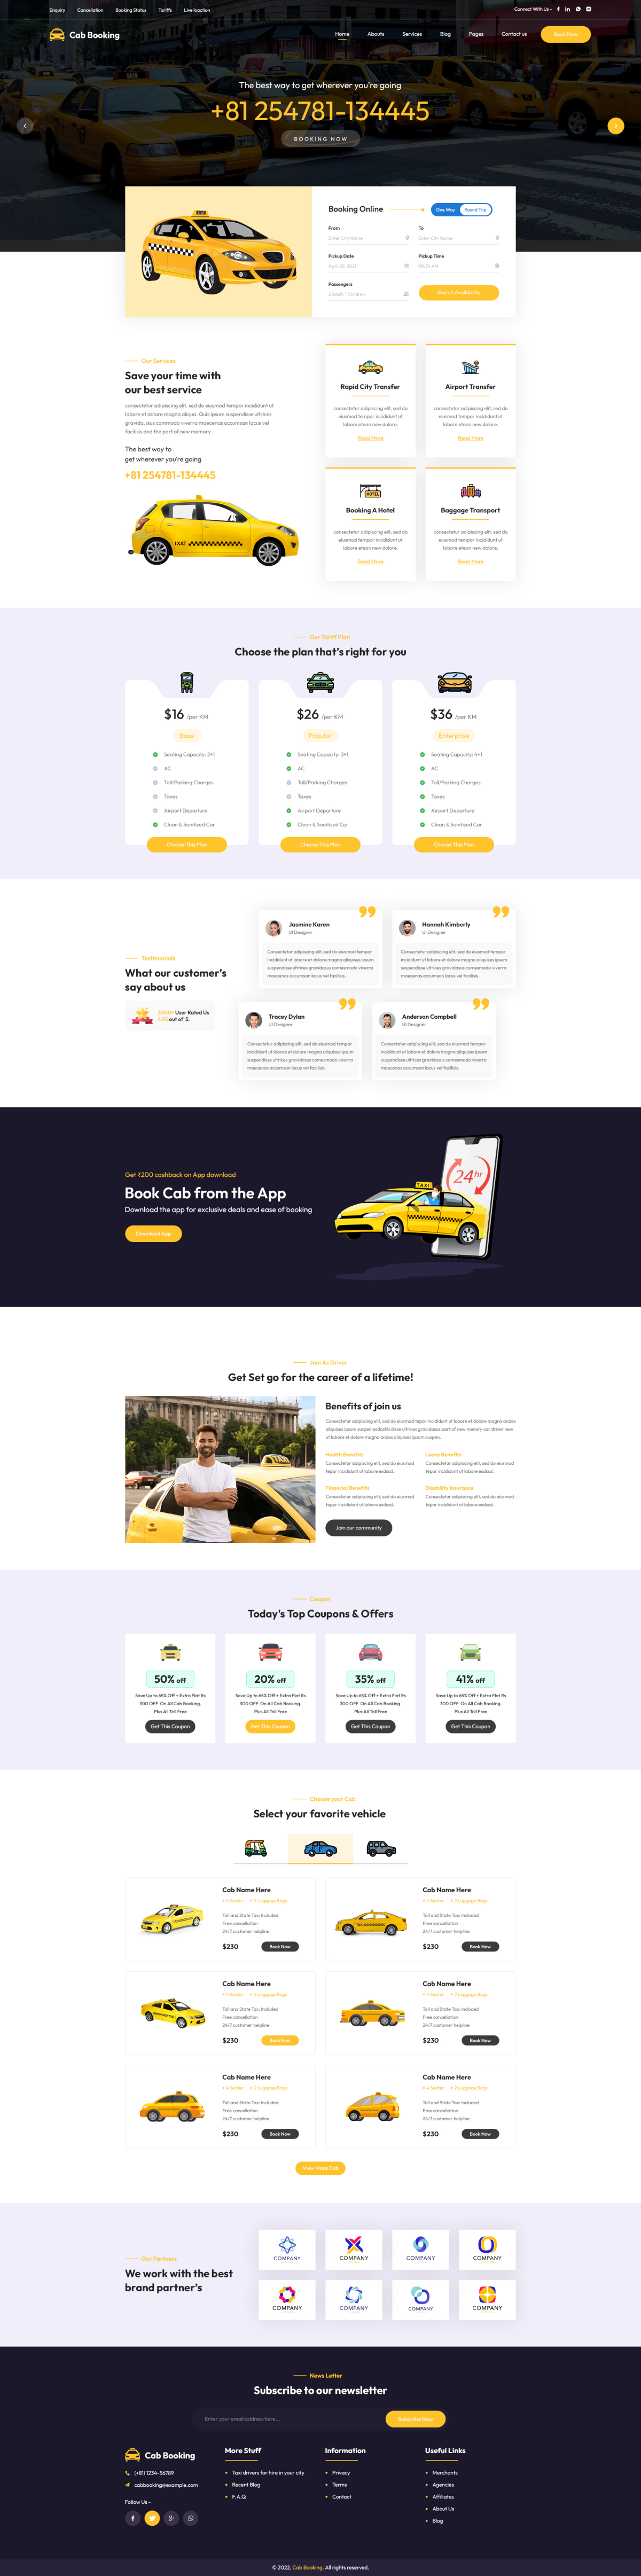 Taxi WordPress Theme